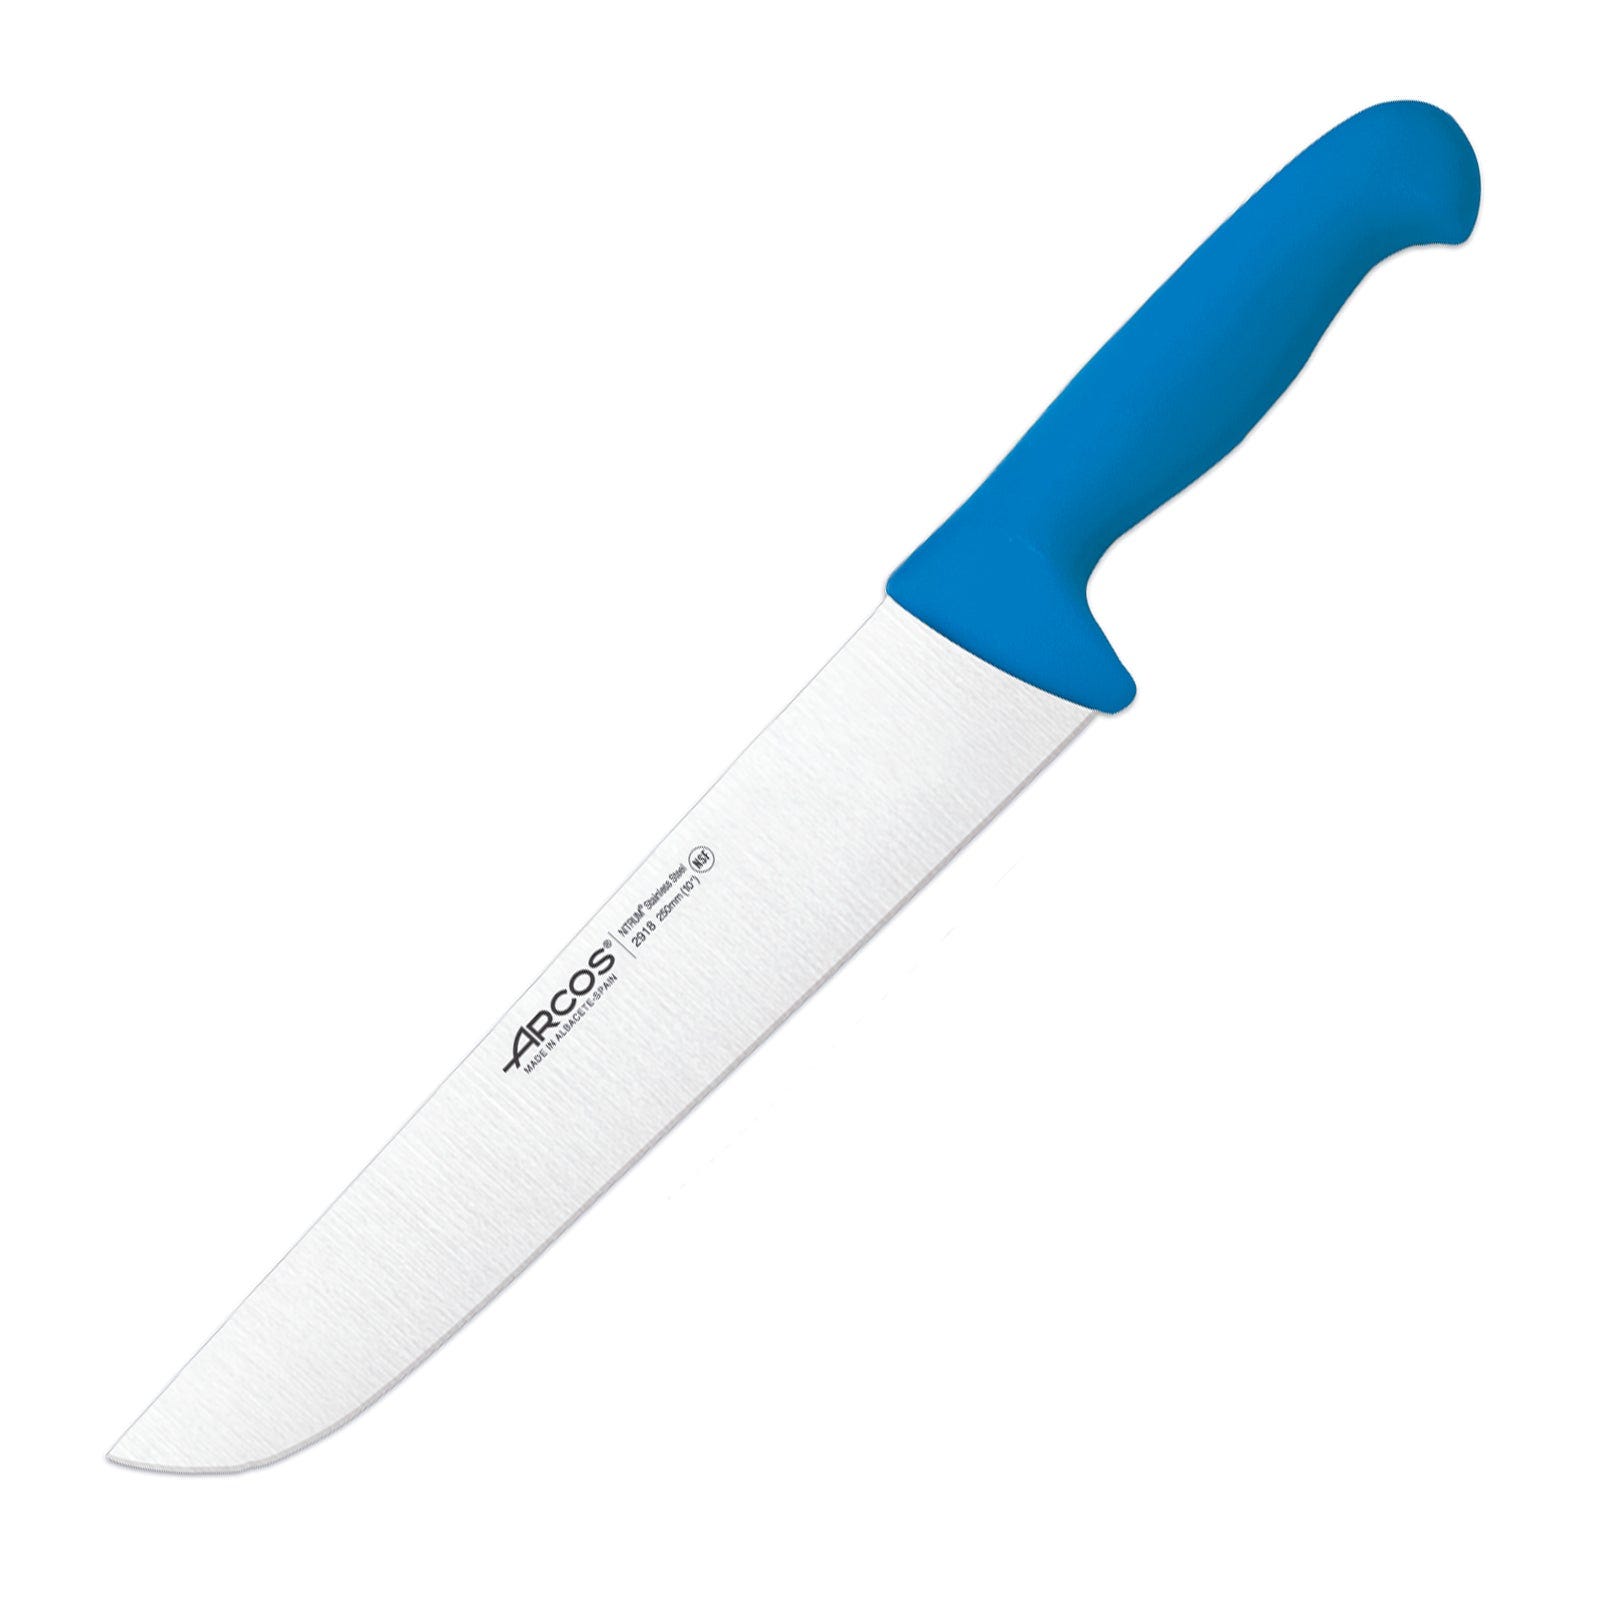 ARCOS Serie 2900 - Cuchillo de pescadería - Nitrum acero inoxidable 12 -  Mango azul de polipropileno - Plata - Sistema de identificación de color 